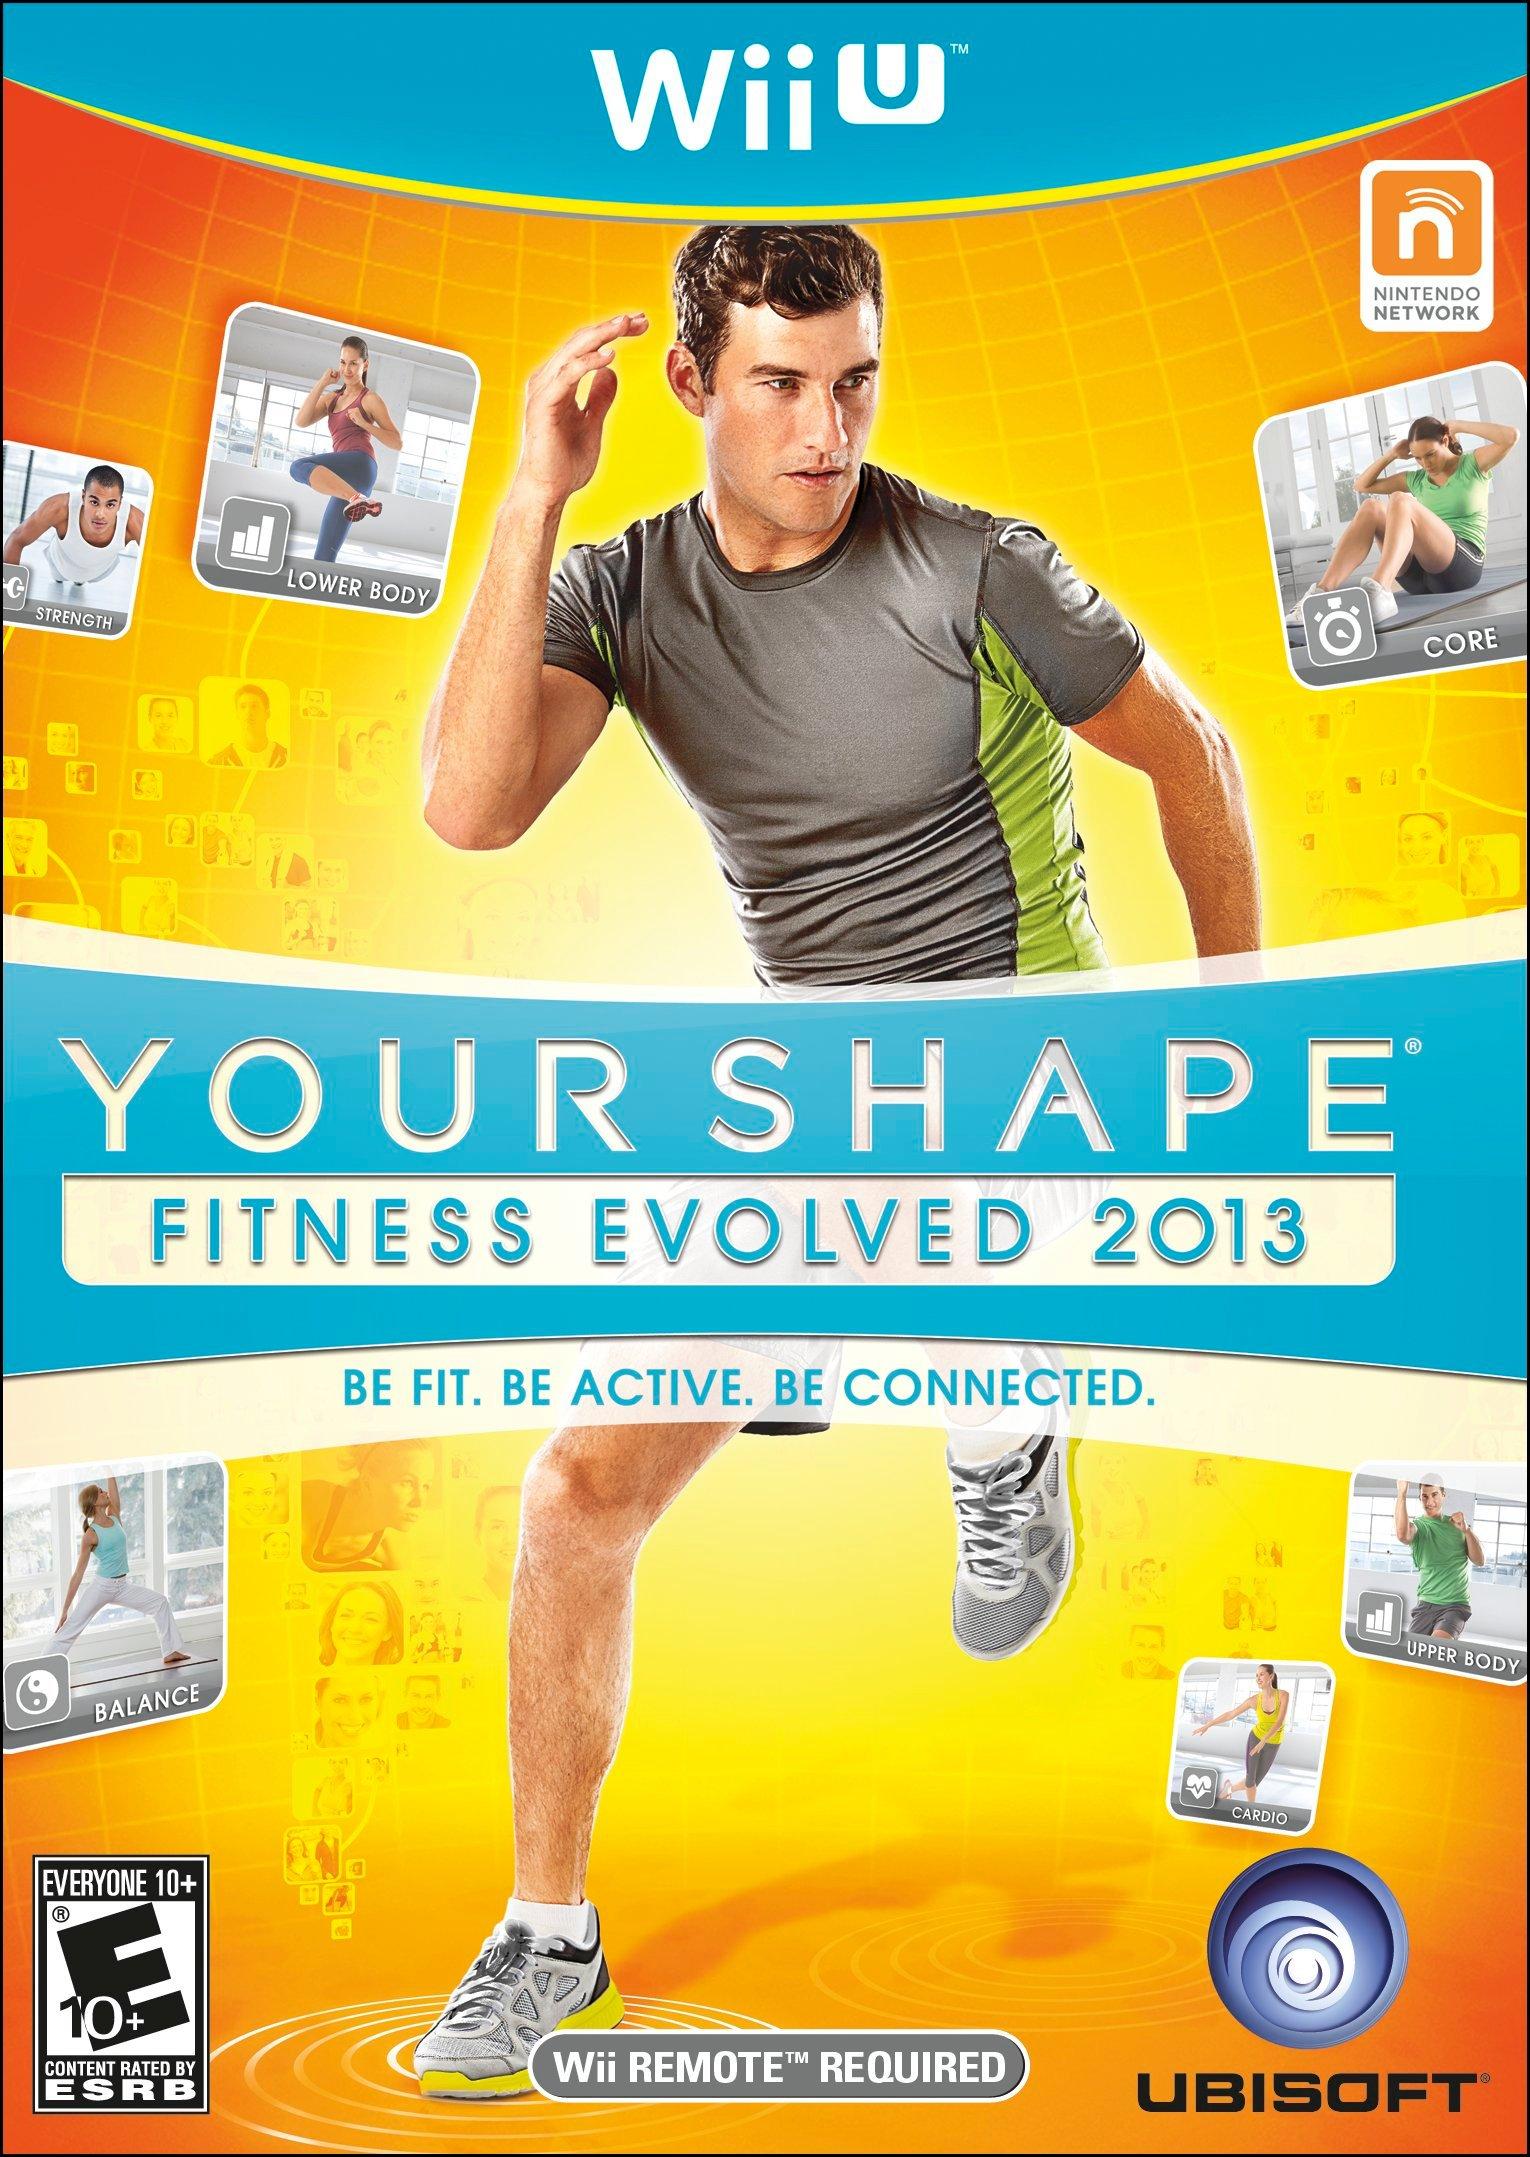 your shape fitness evolved wii u